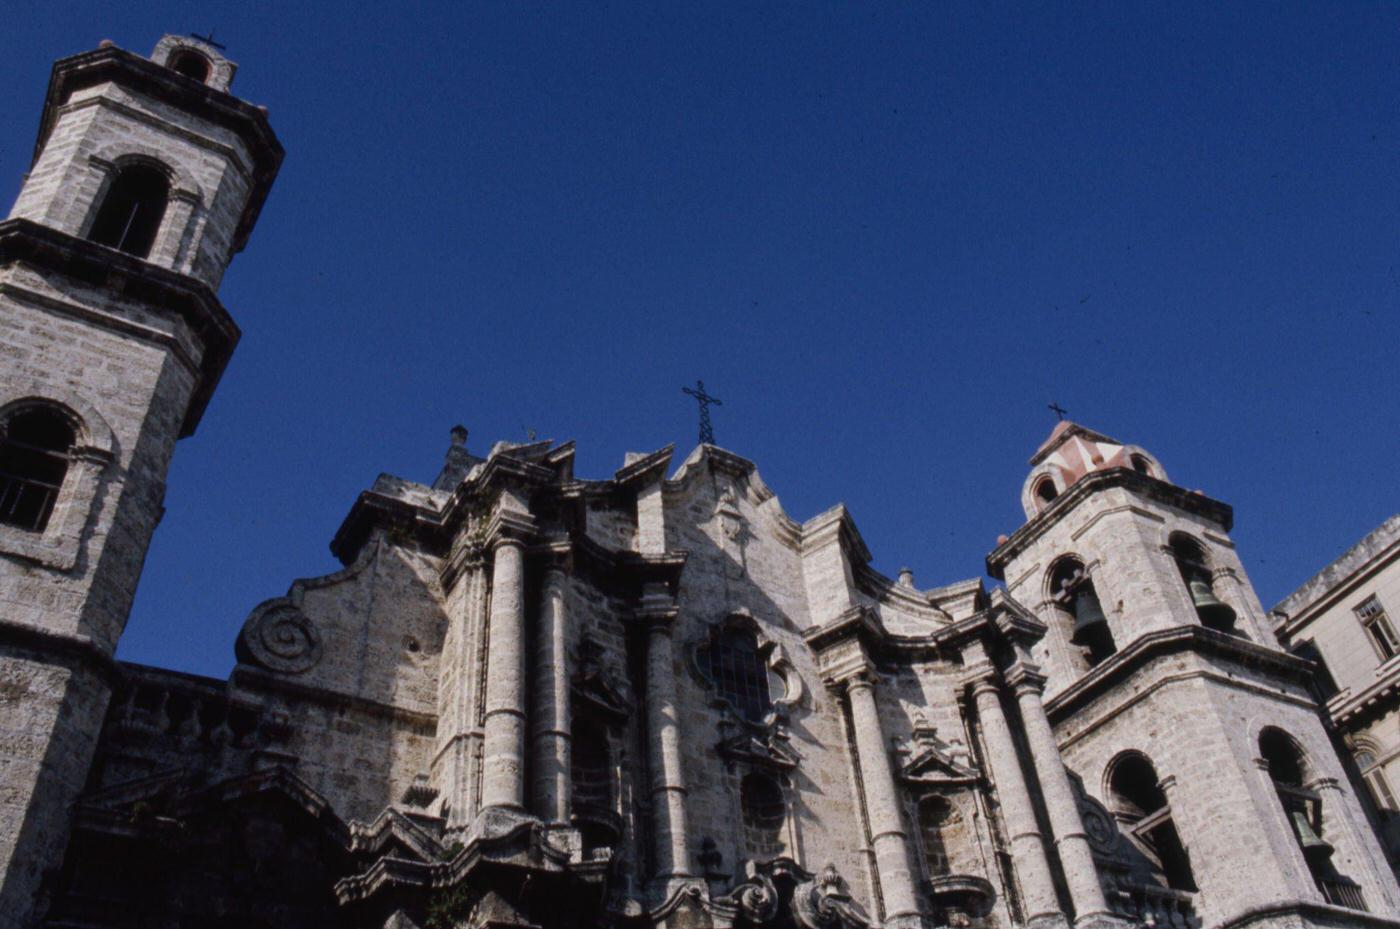 Cathedral Square in Old Havana, featured in 'Closeup: Cuba - The Castro Generation', Havana, Cuba, 1977.